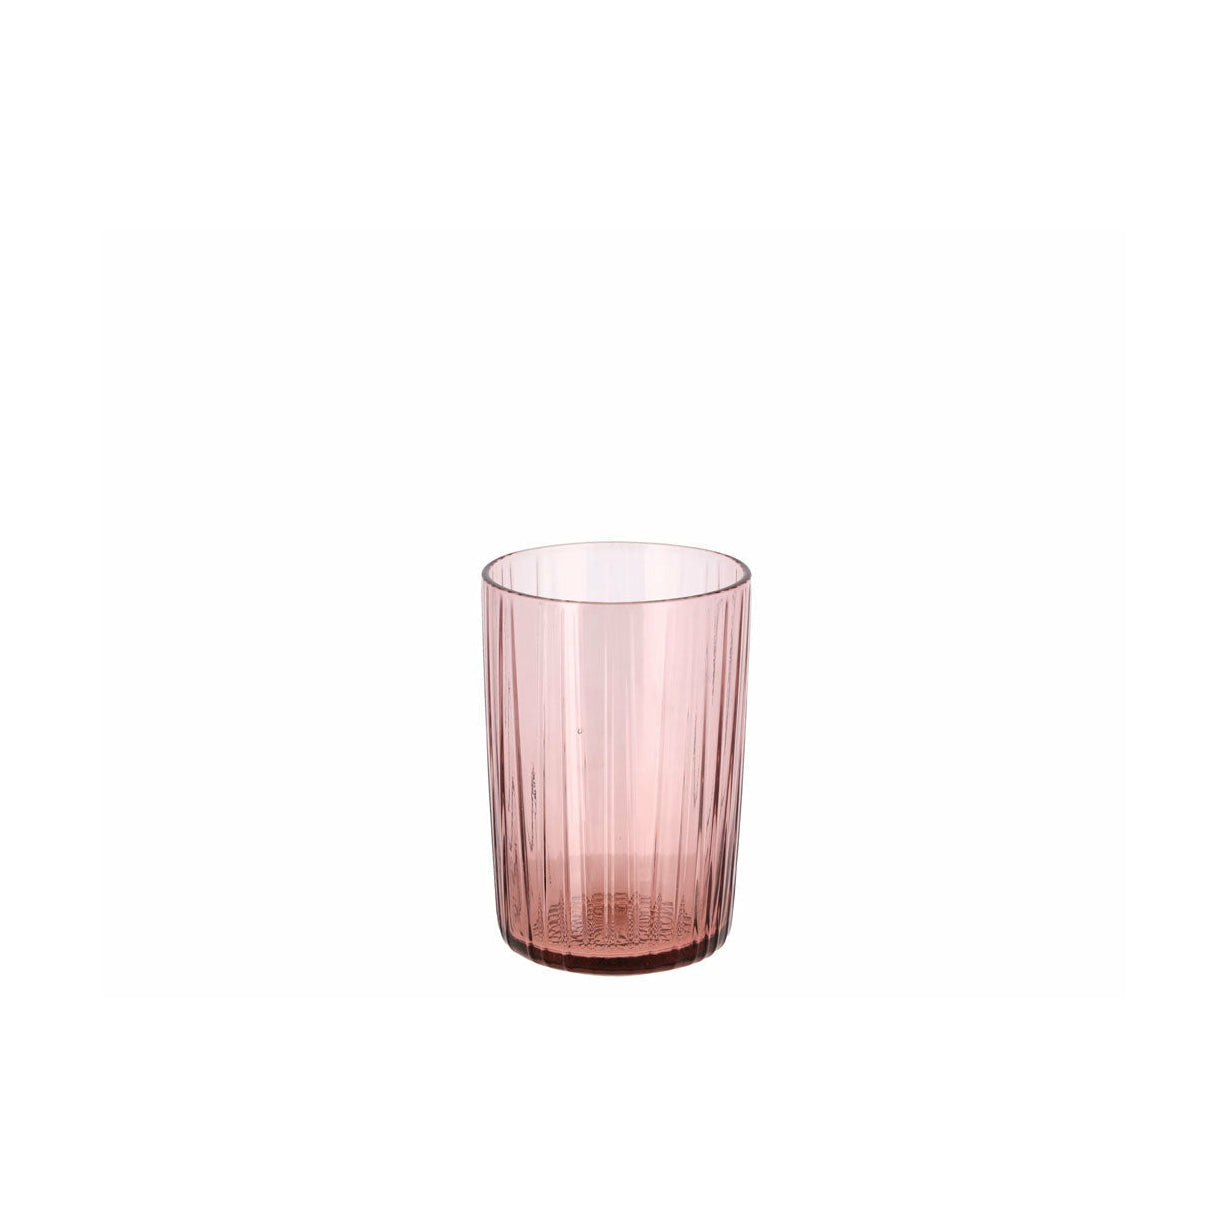 BITZ Kusintha dricker glas 28 cl 4 st, rosa